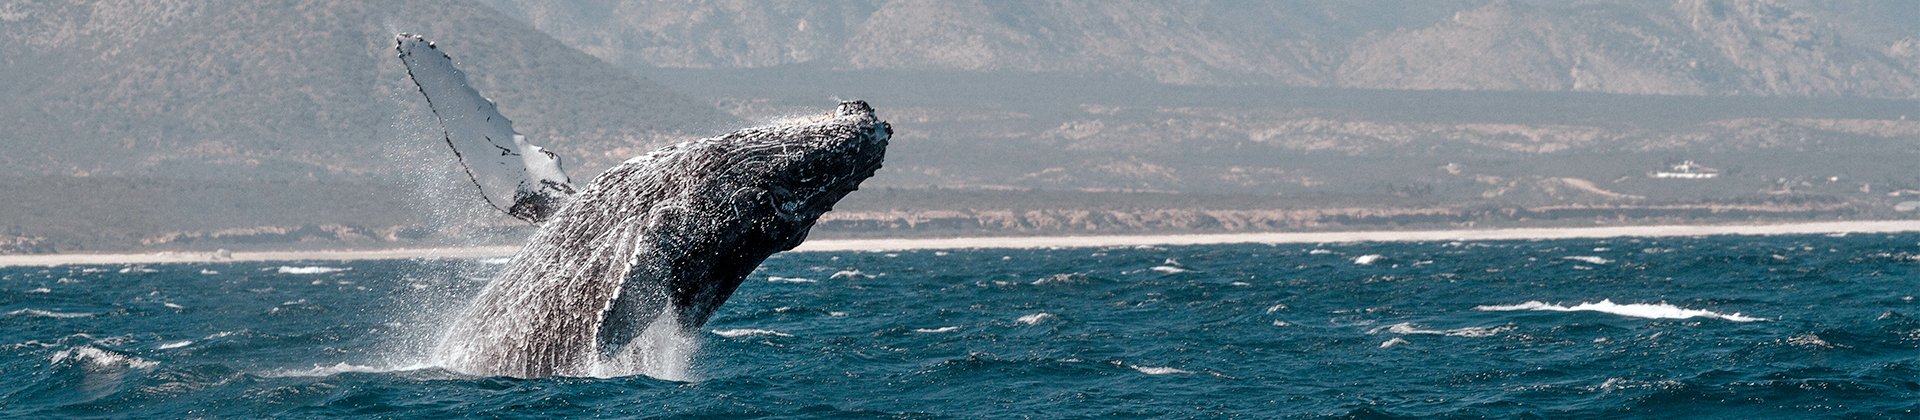 Whale in Baja